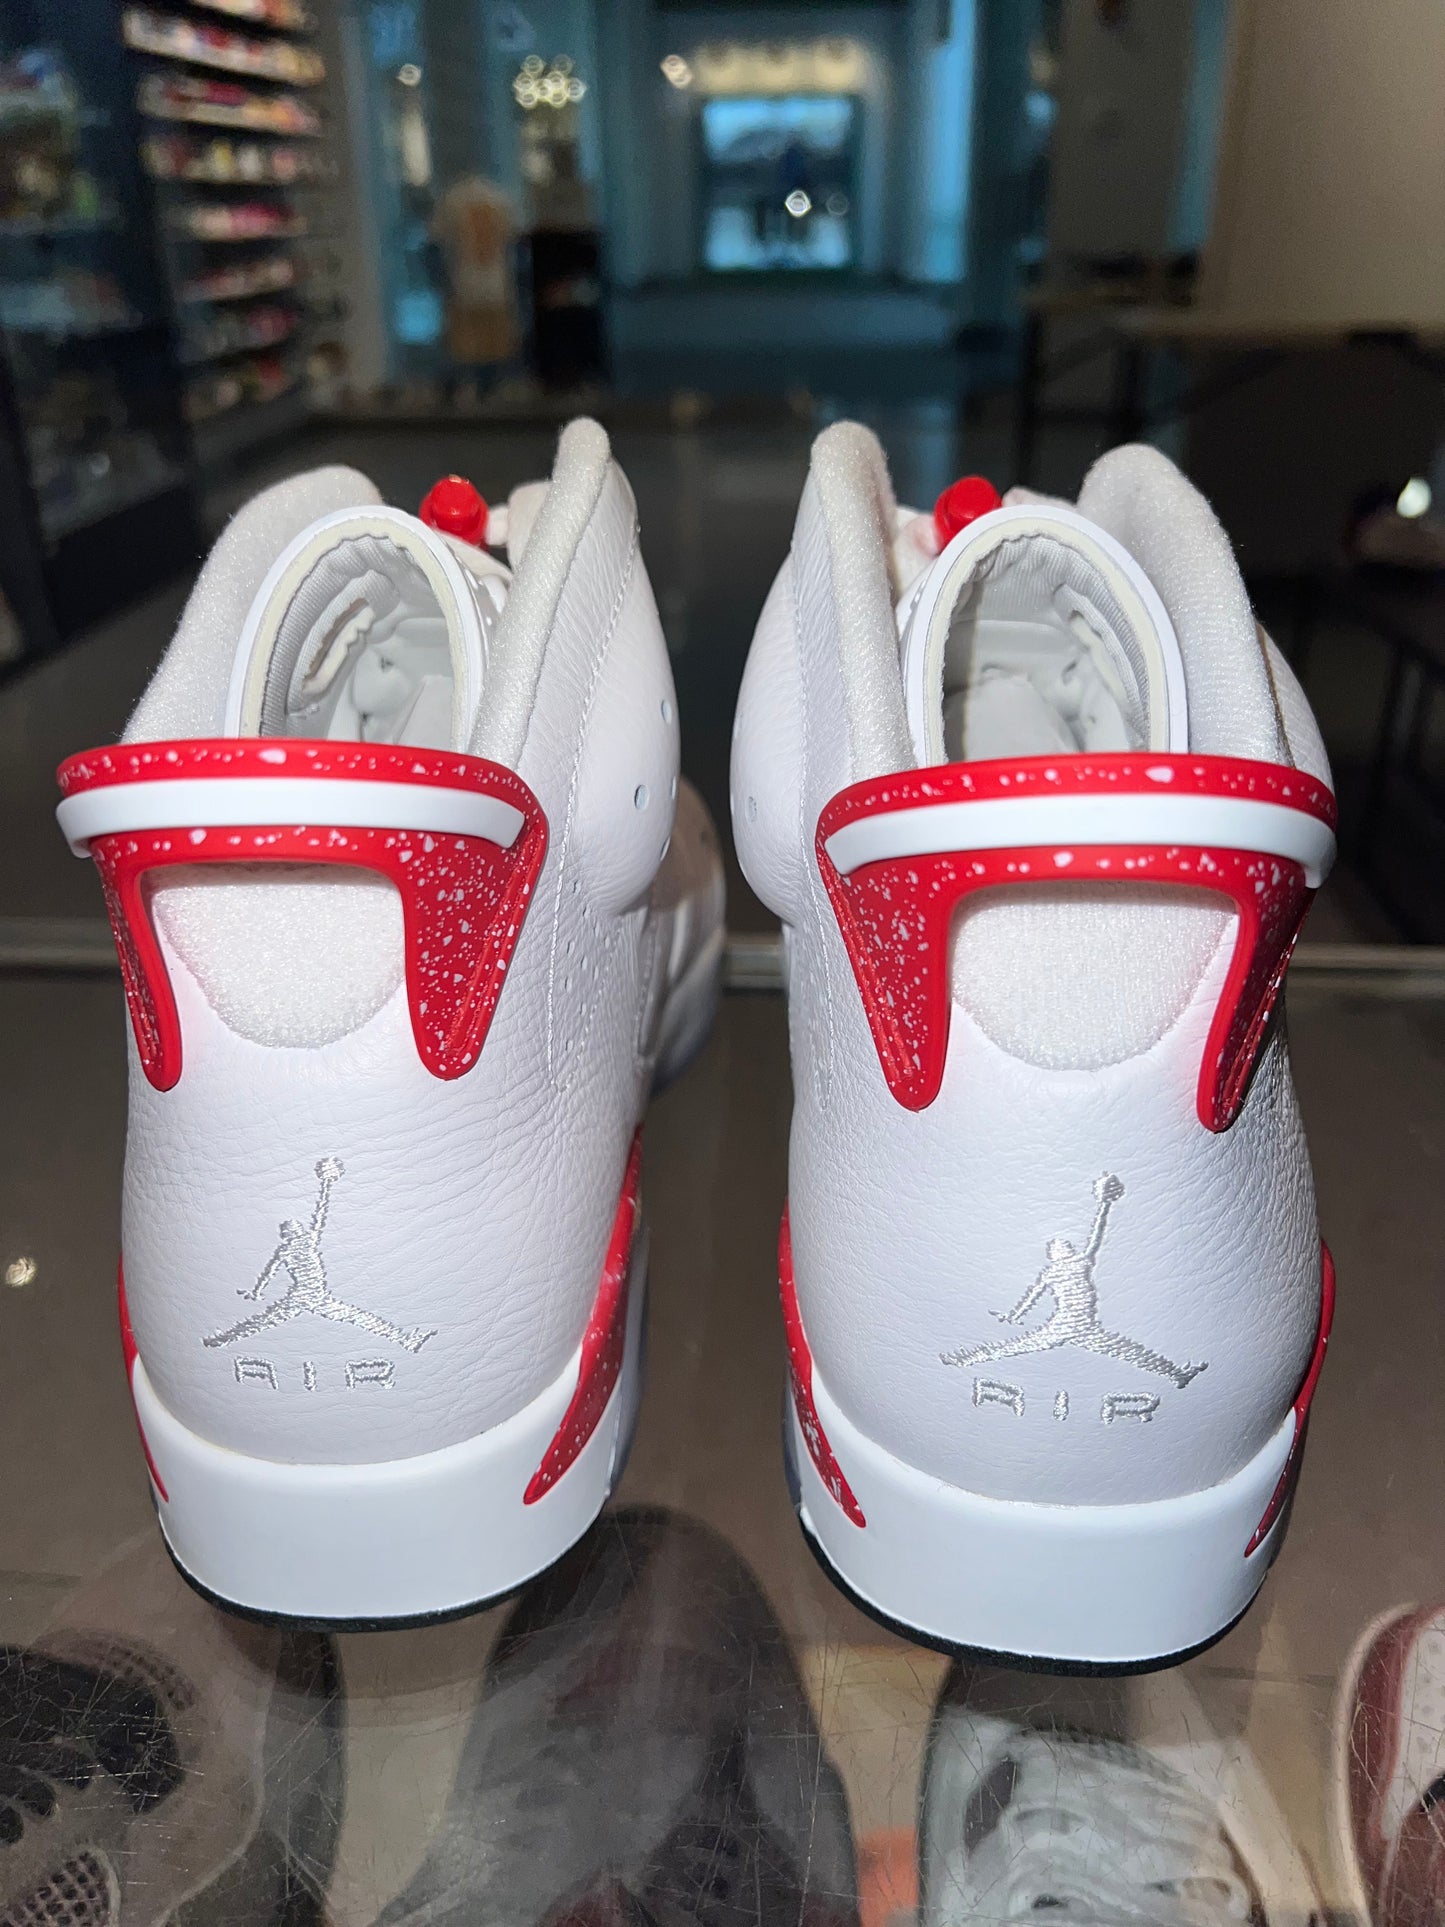 Size 9 Air Jordan 6 “Red Oreo” Brand New (Mall)